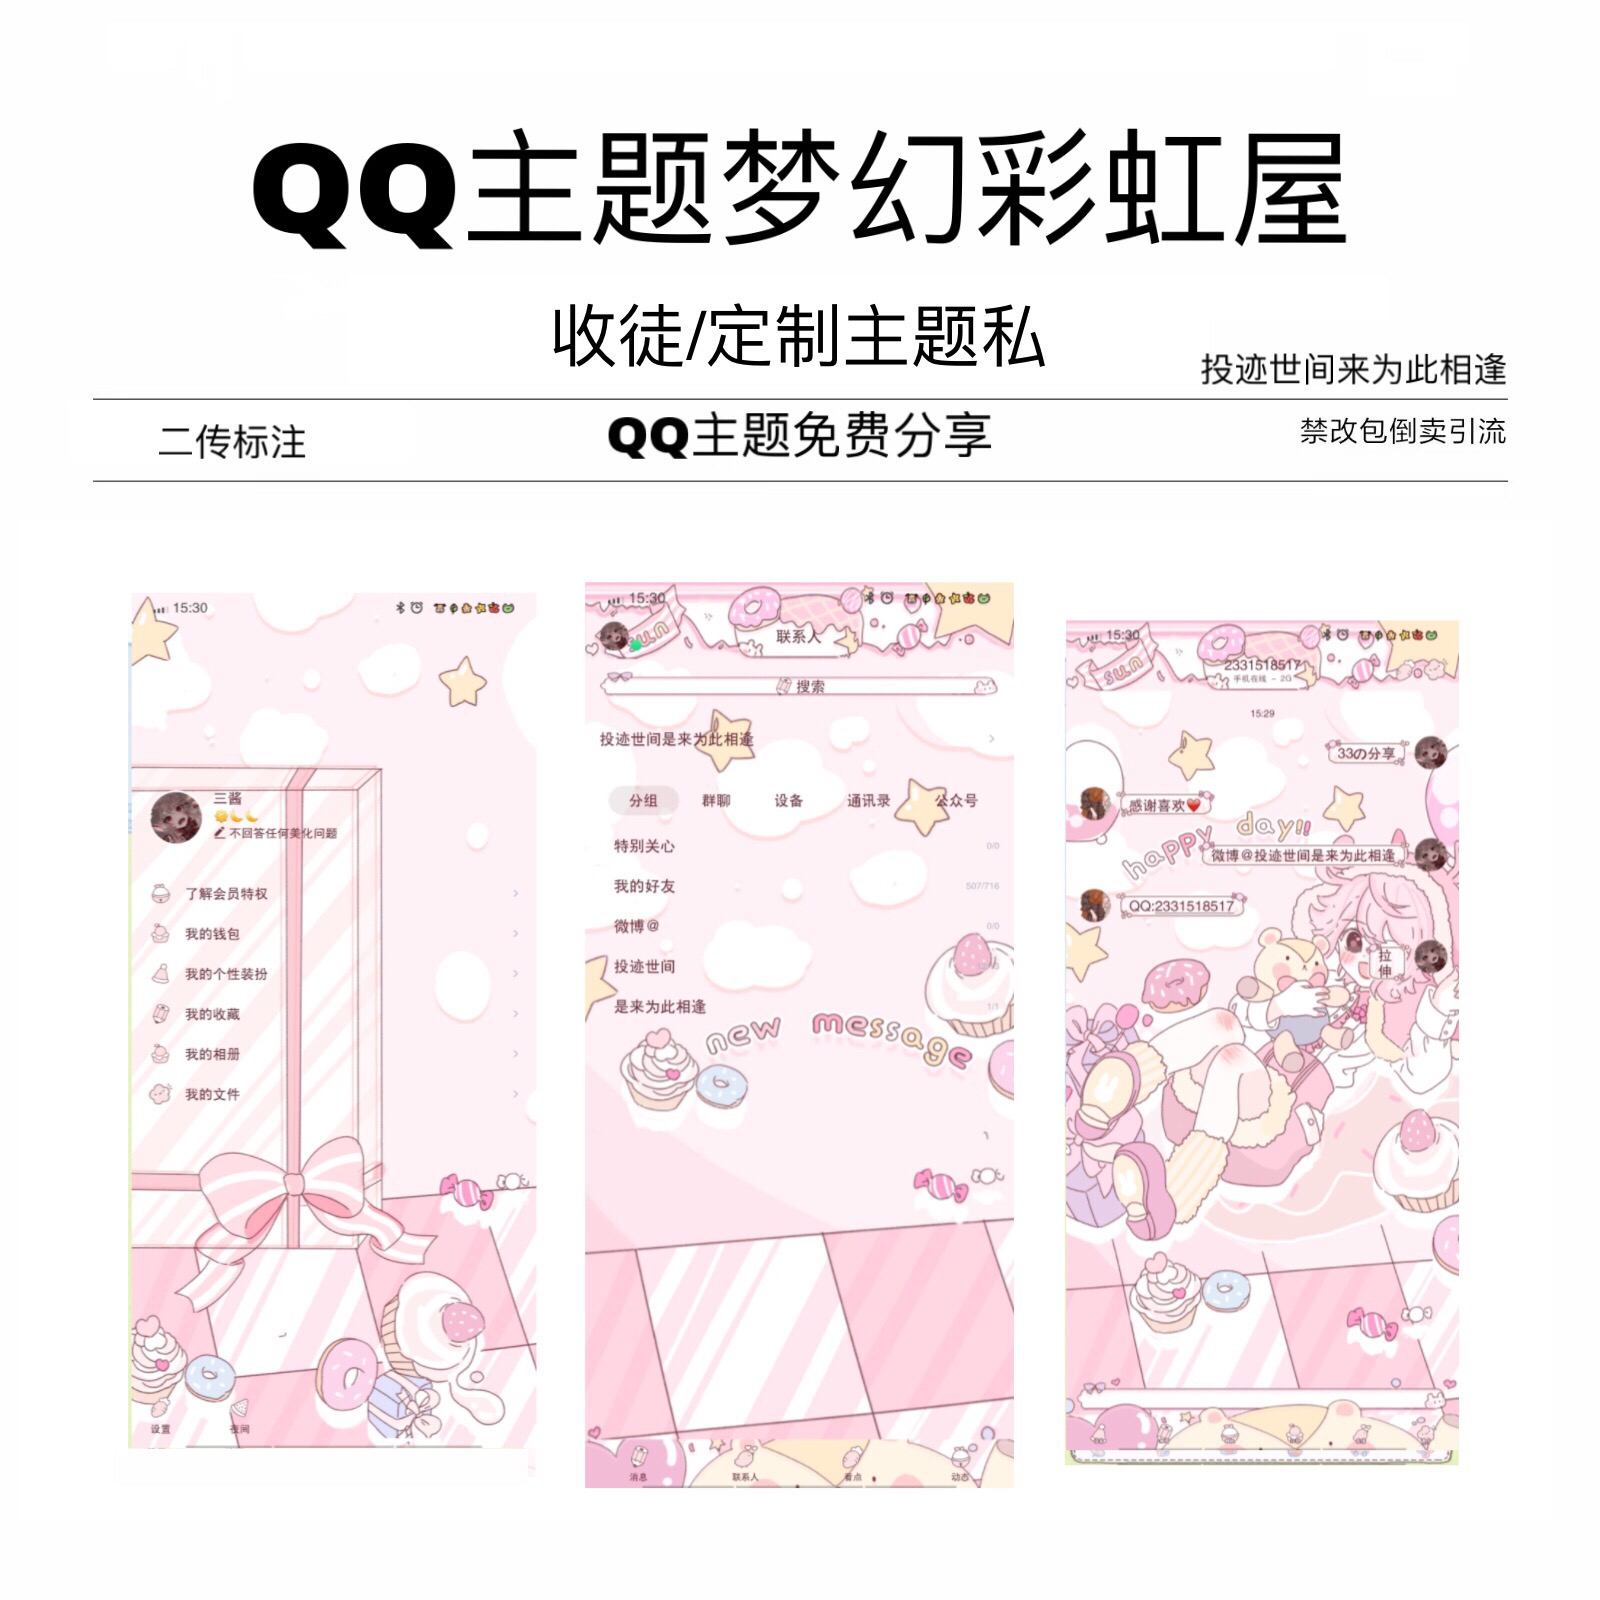 QQ美化包-至死不渝v8.33版 - 手机软件 - 刀贱贱资源博客